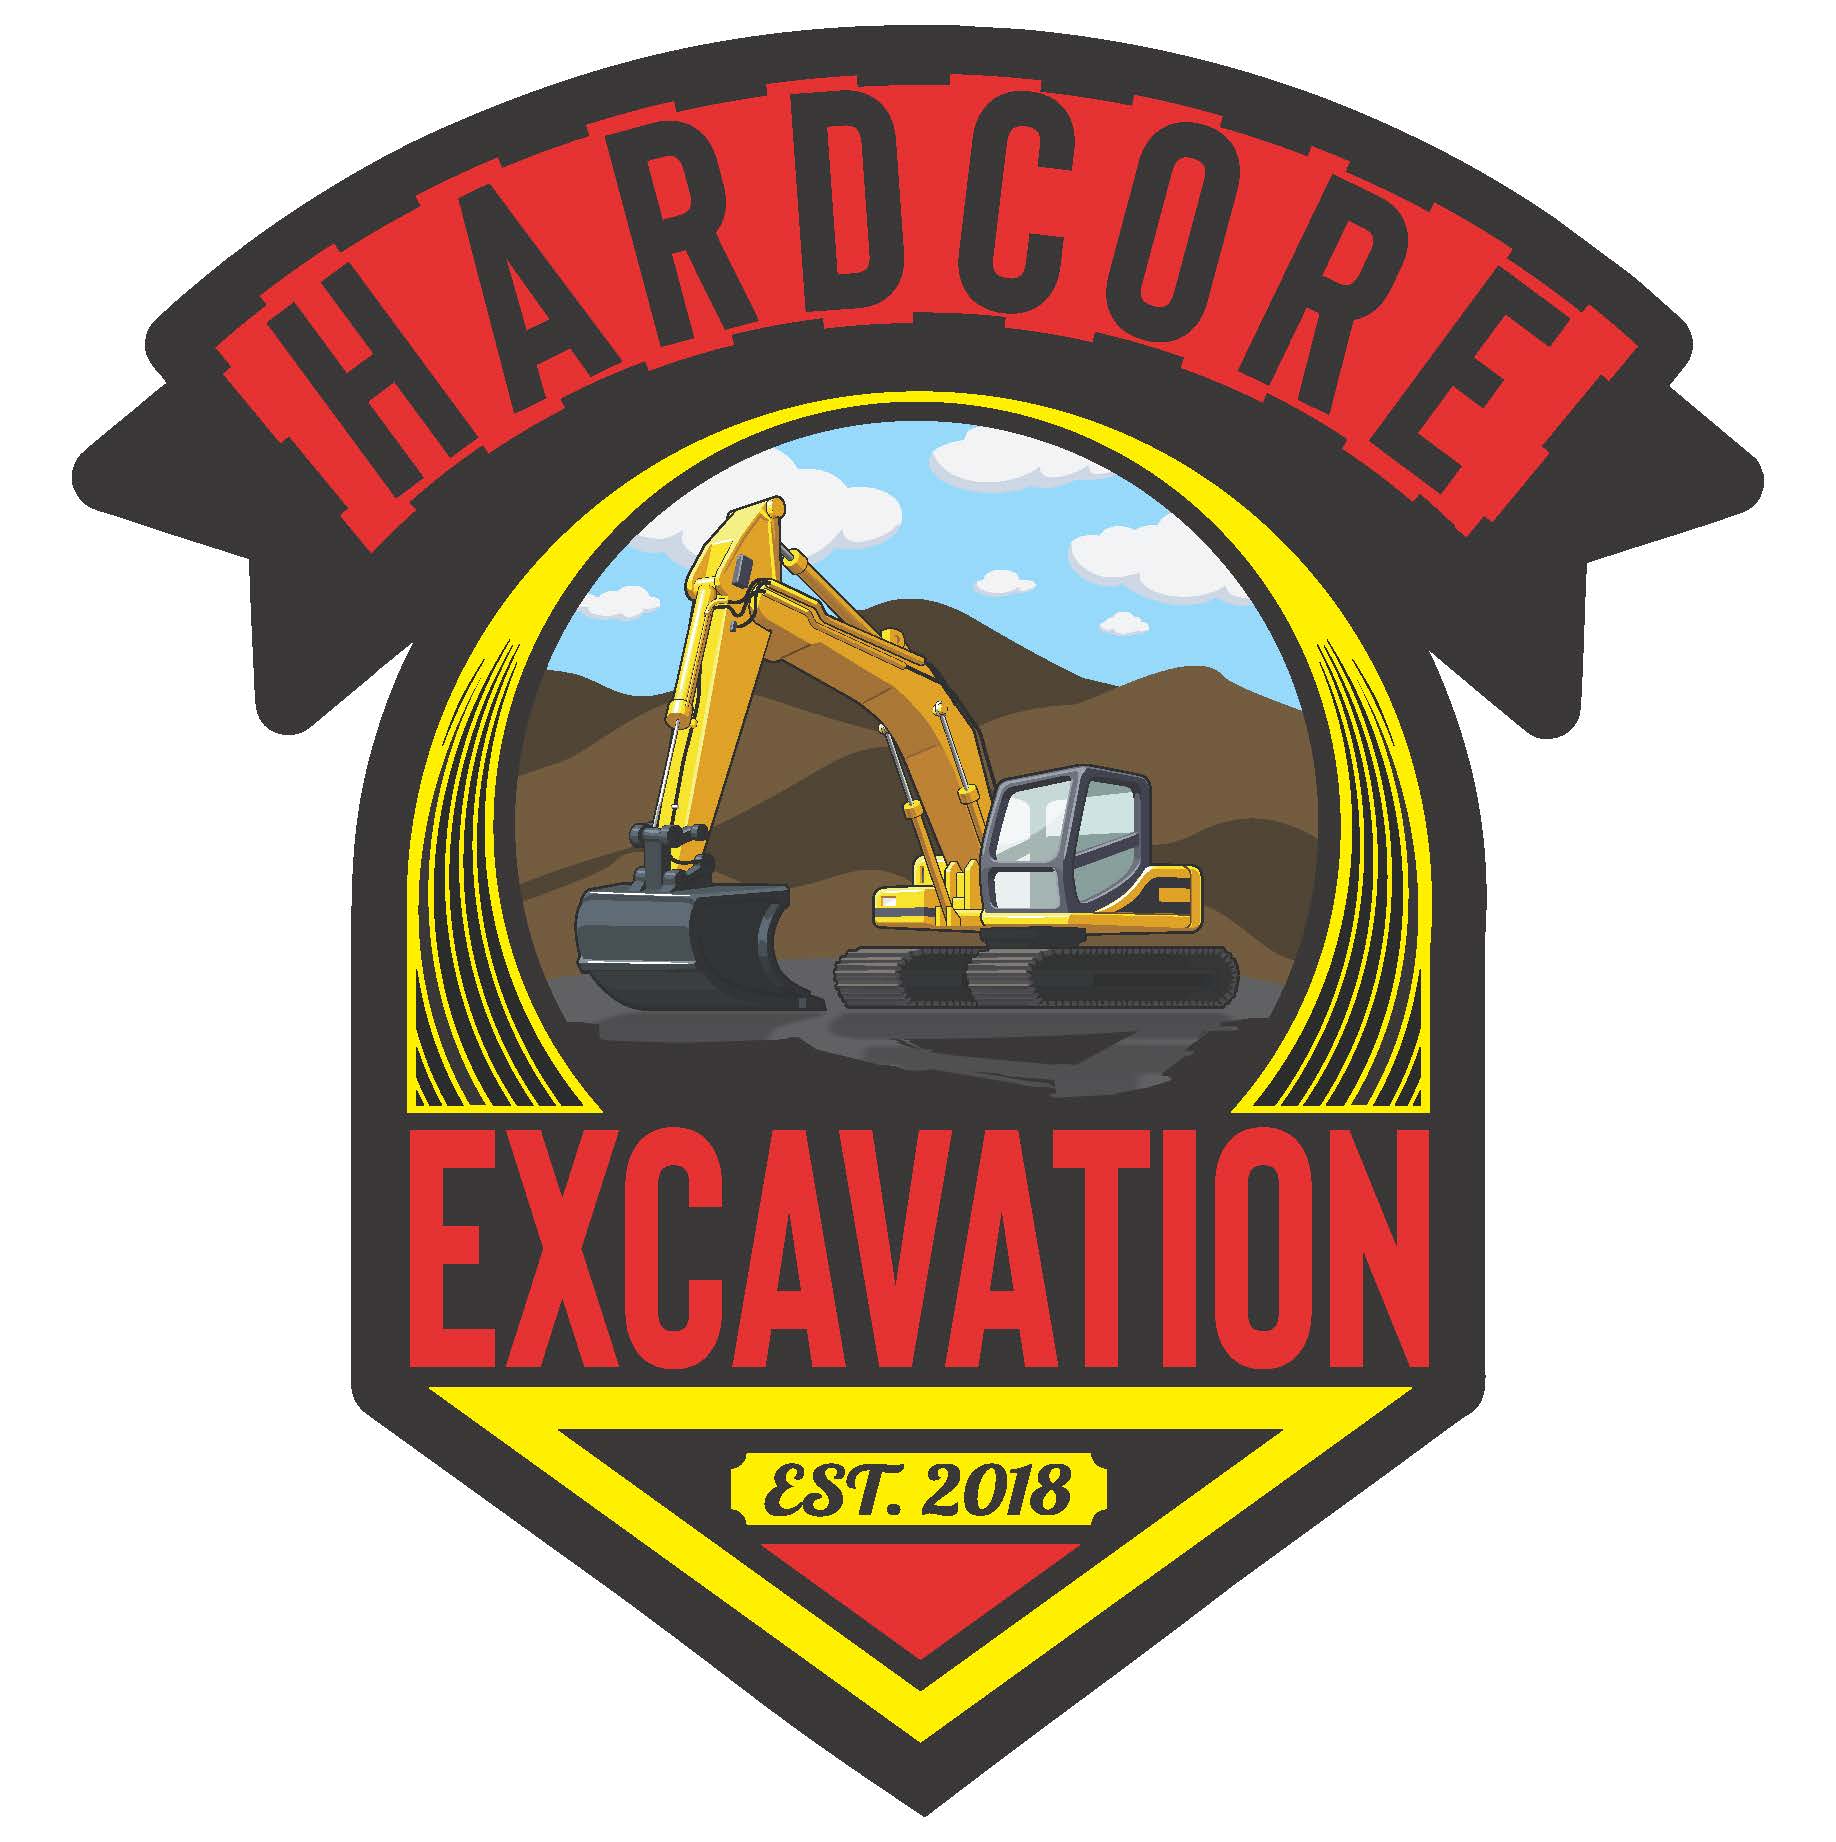 testimonial from Hardcore Excavation